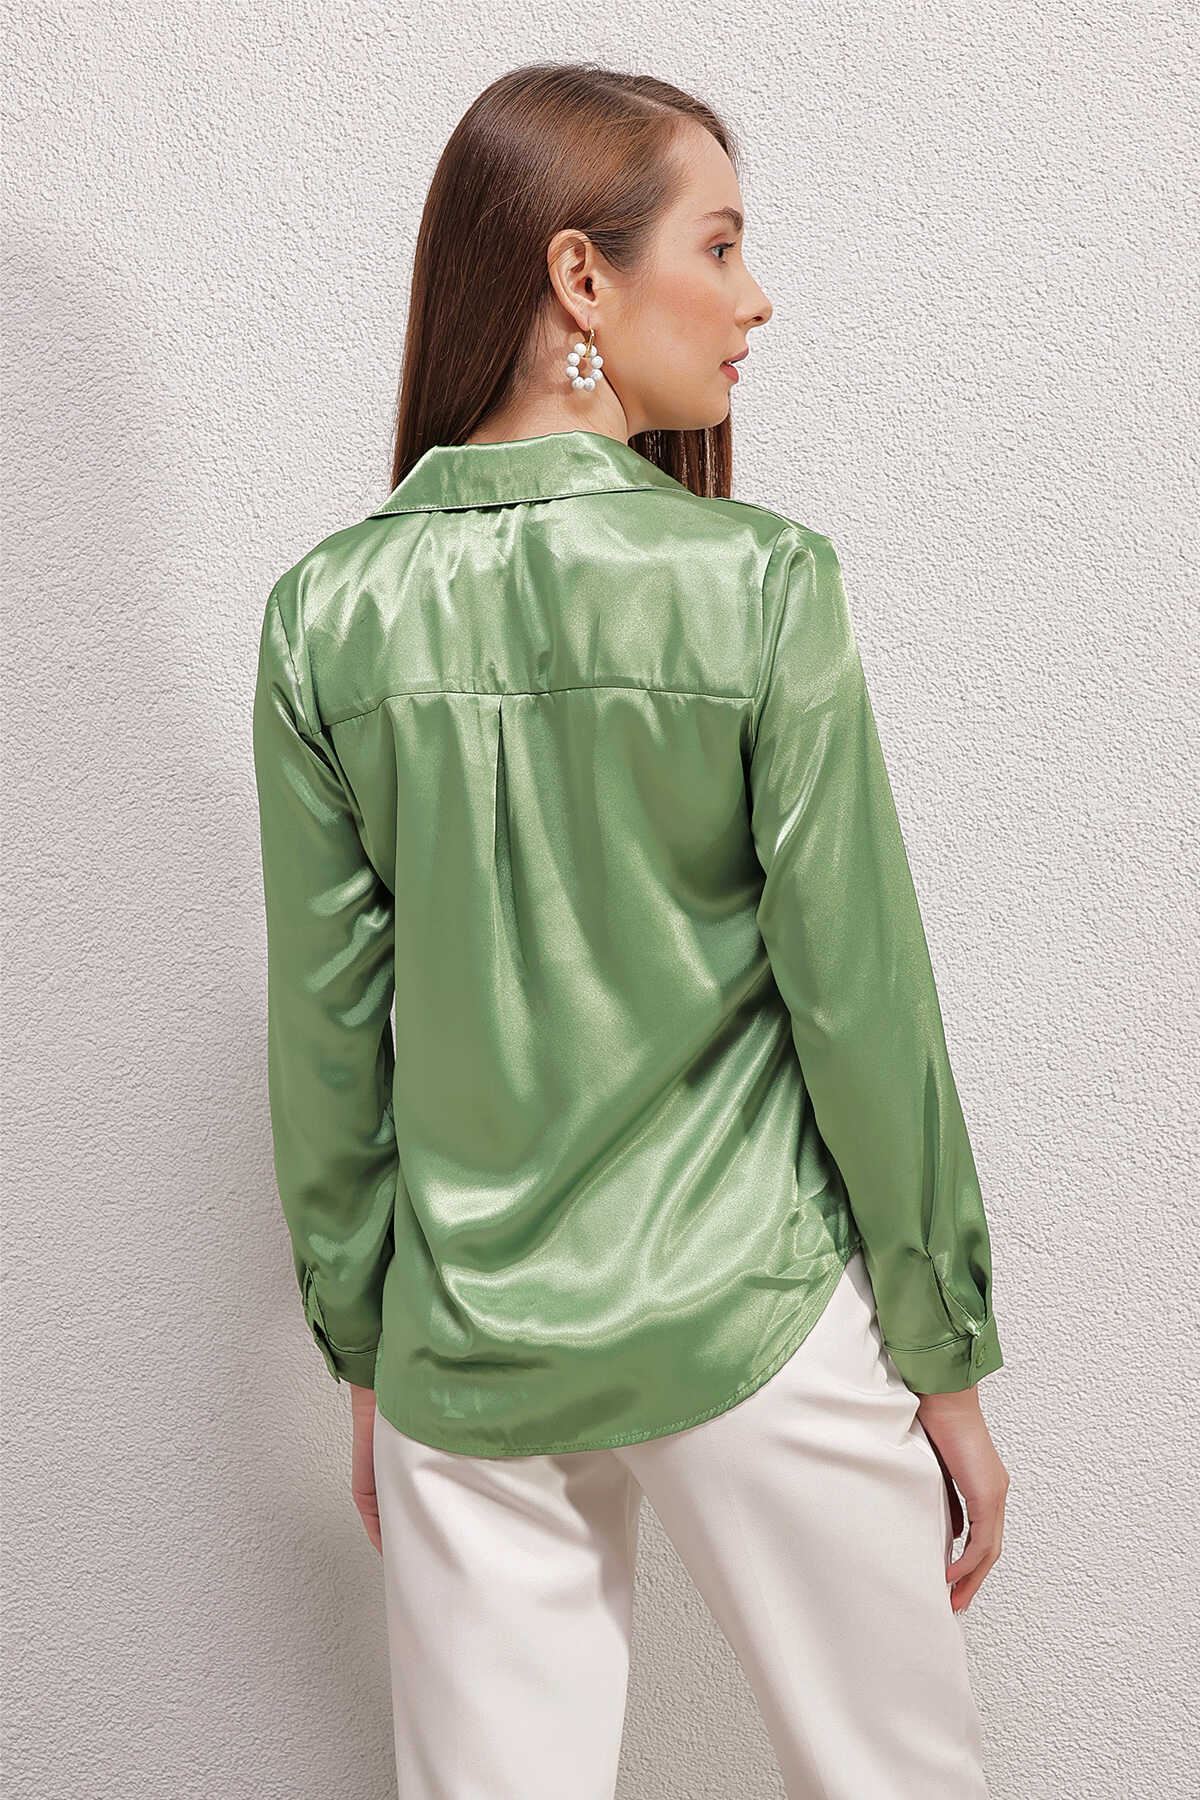 Giyinsen Kadın Yeşil Gömlek - 24YM21000014